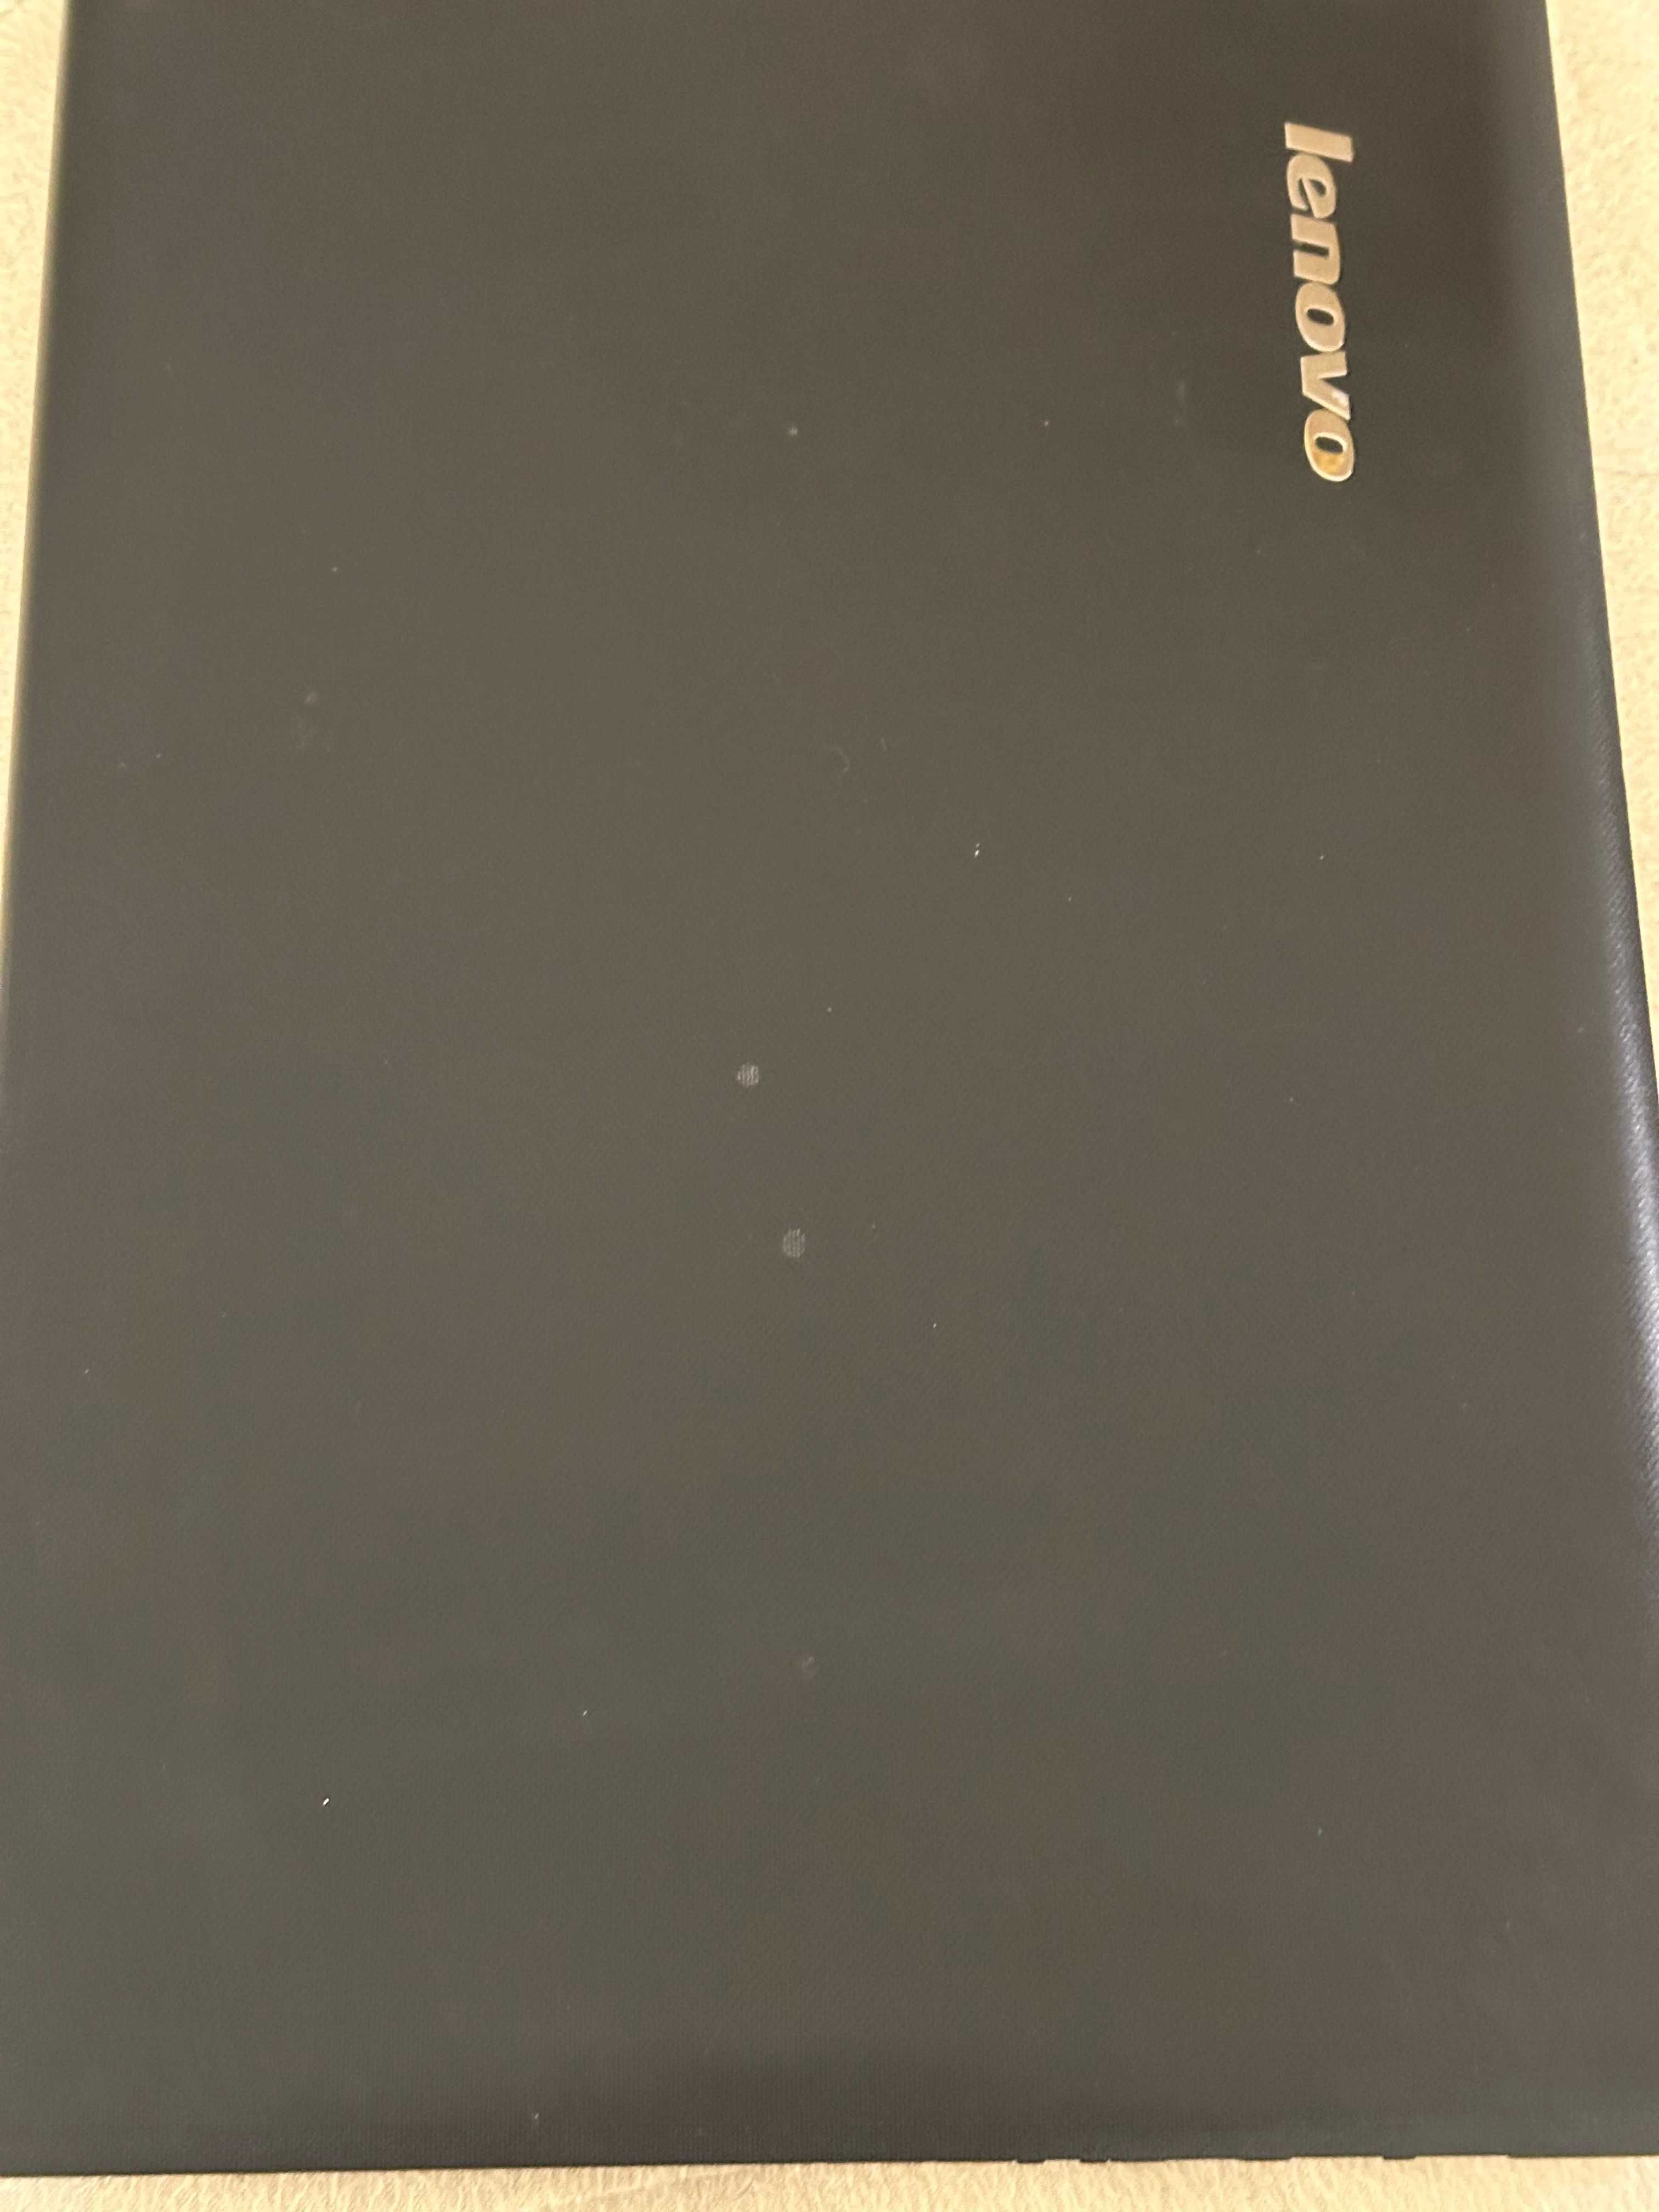 ноутбук Lenovo G50-30